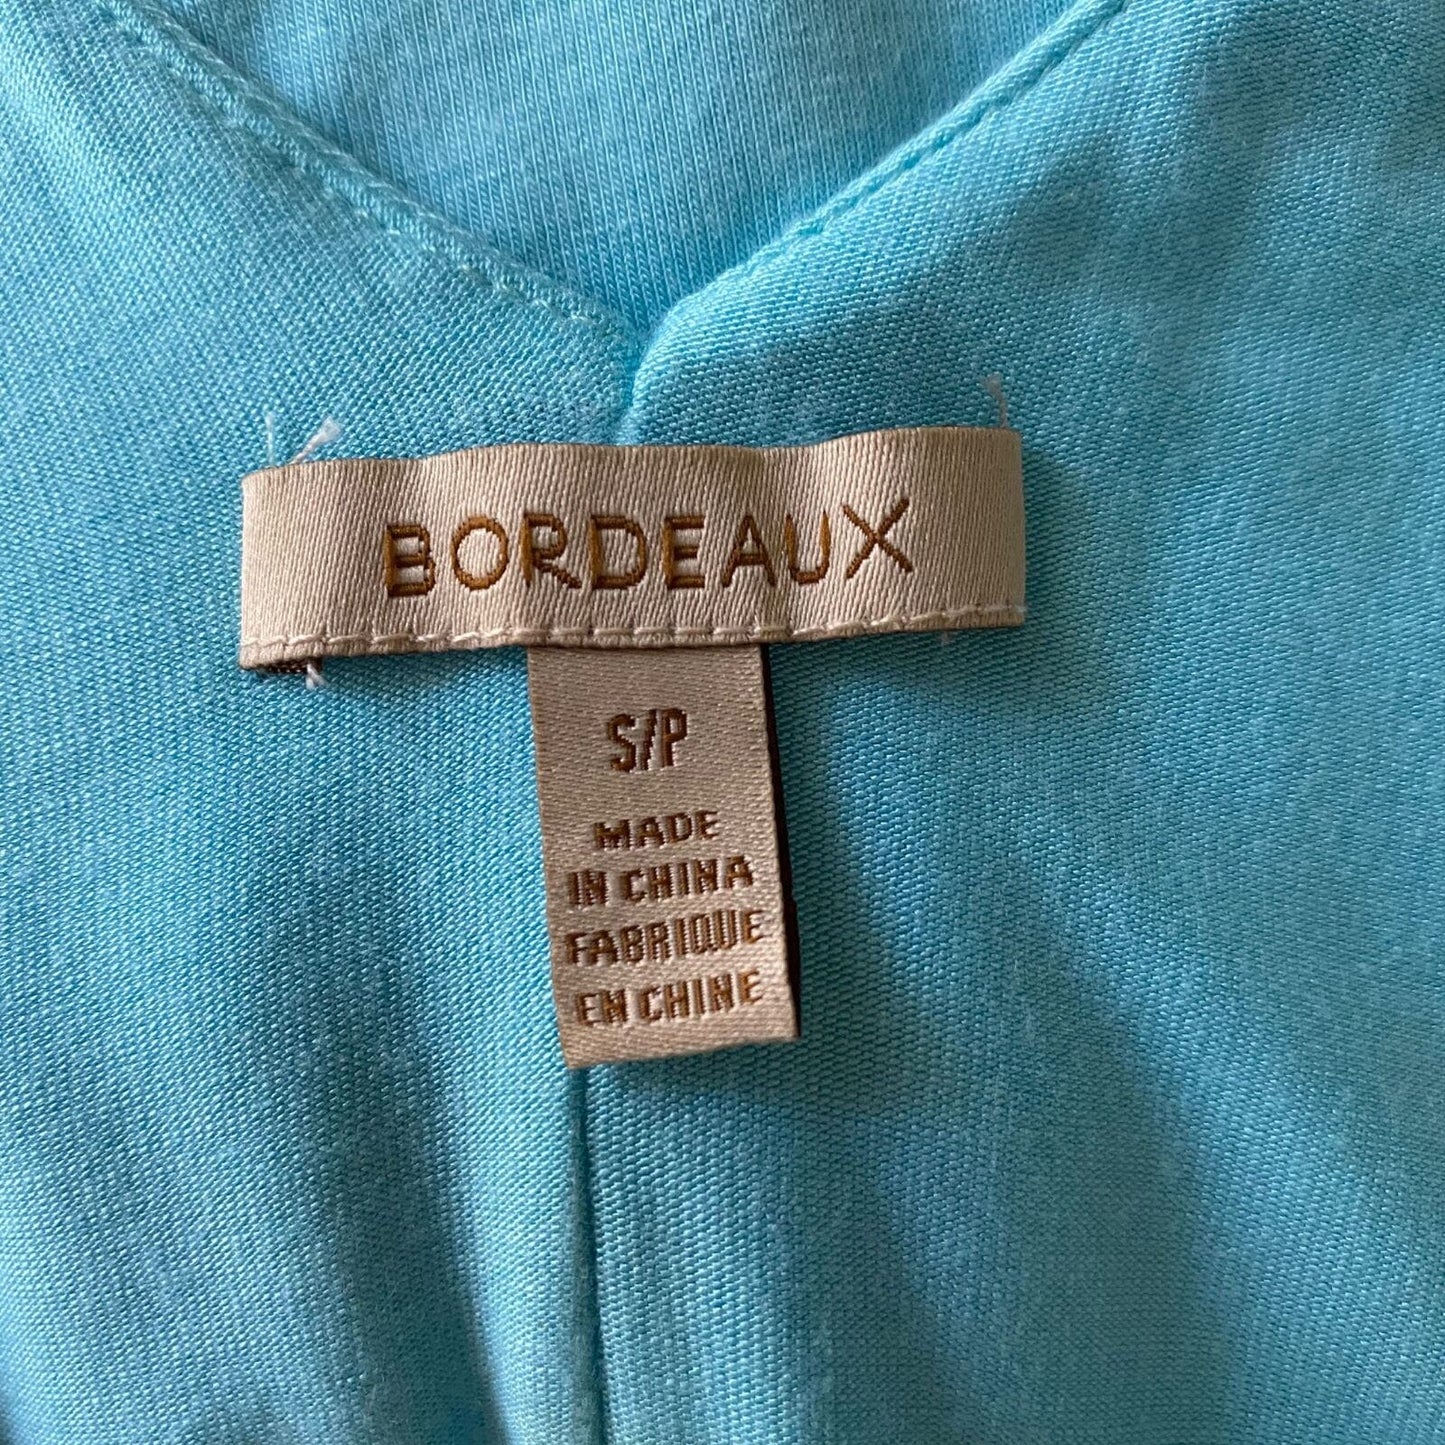 Anthropologie Bordeaux sz S  blue sleeveless tank top